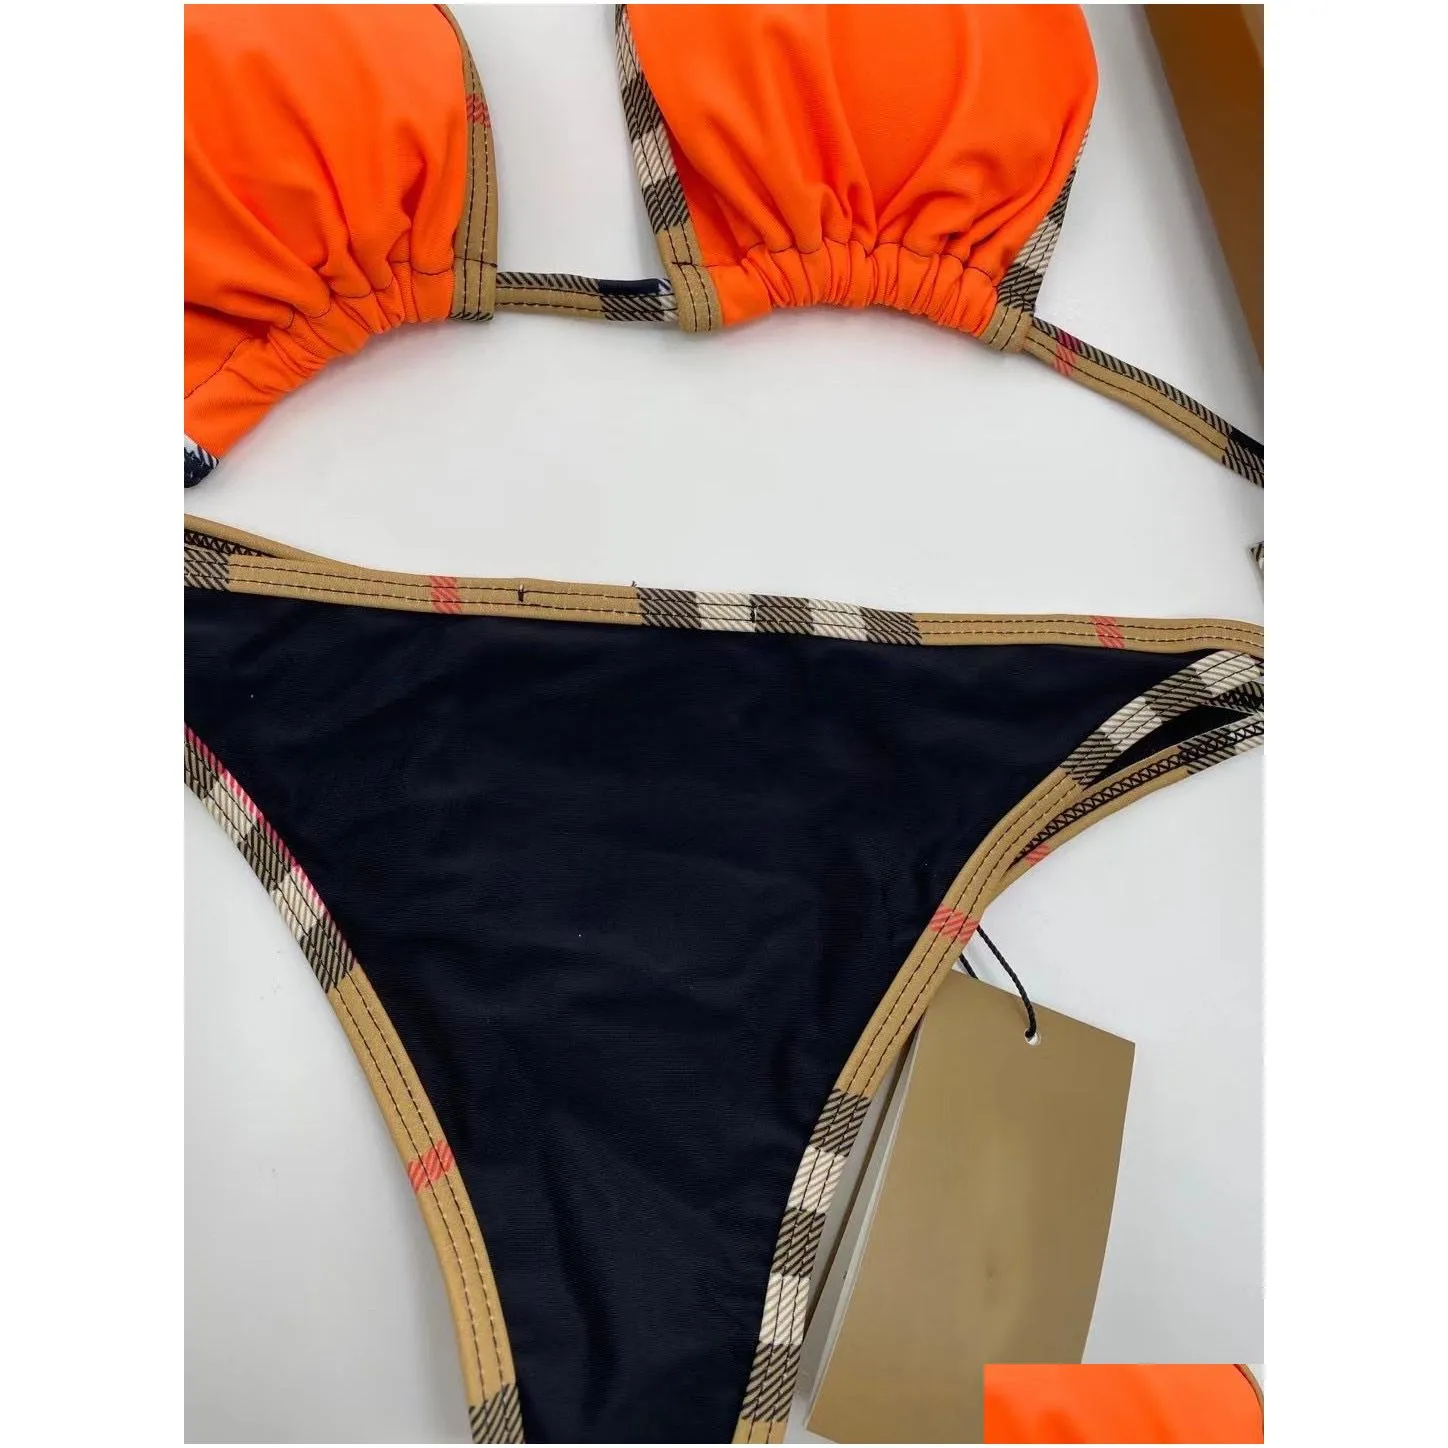 Women Swimwear Push Up Bikinis Bandage Bikini Sets Swimsuit Sexy Beachwear Bathing Suit